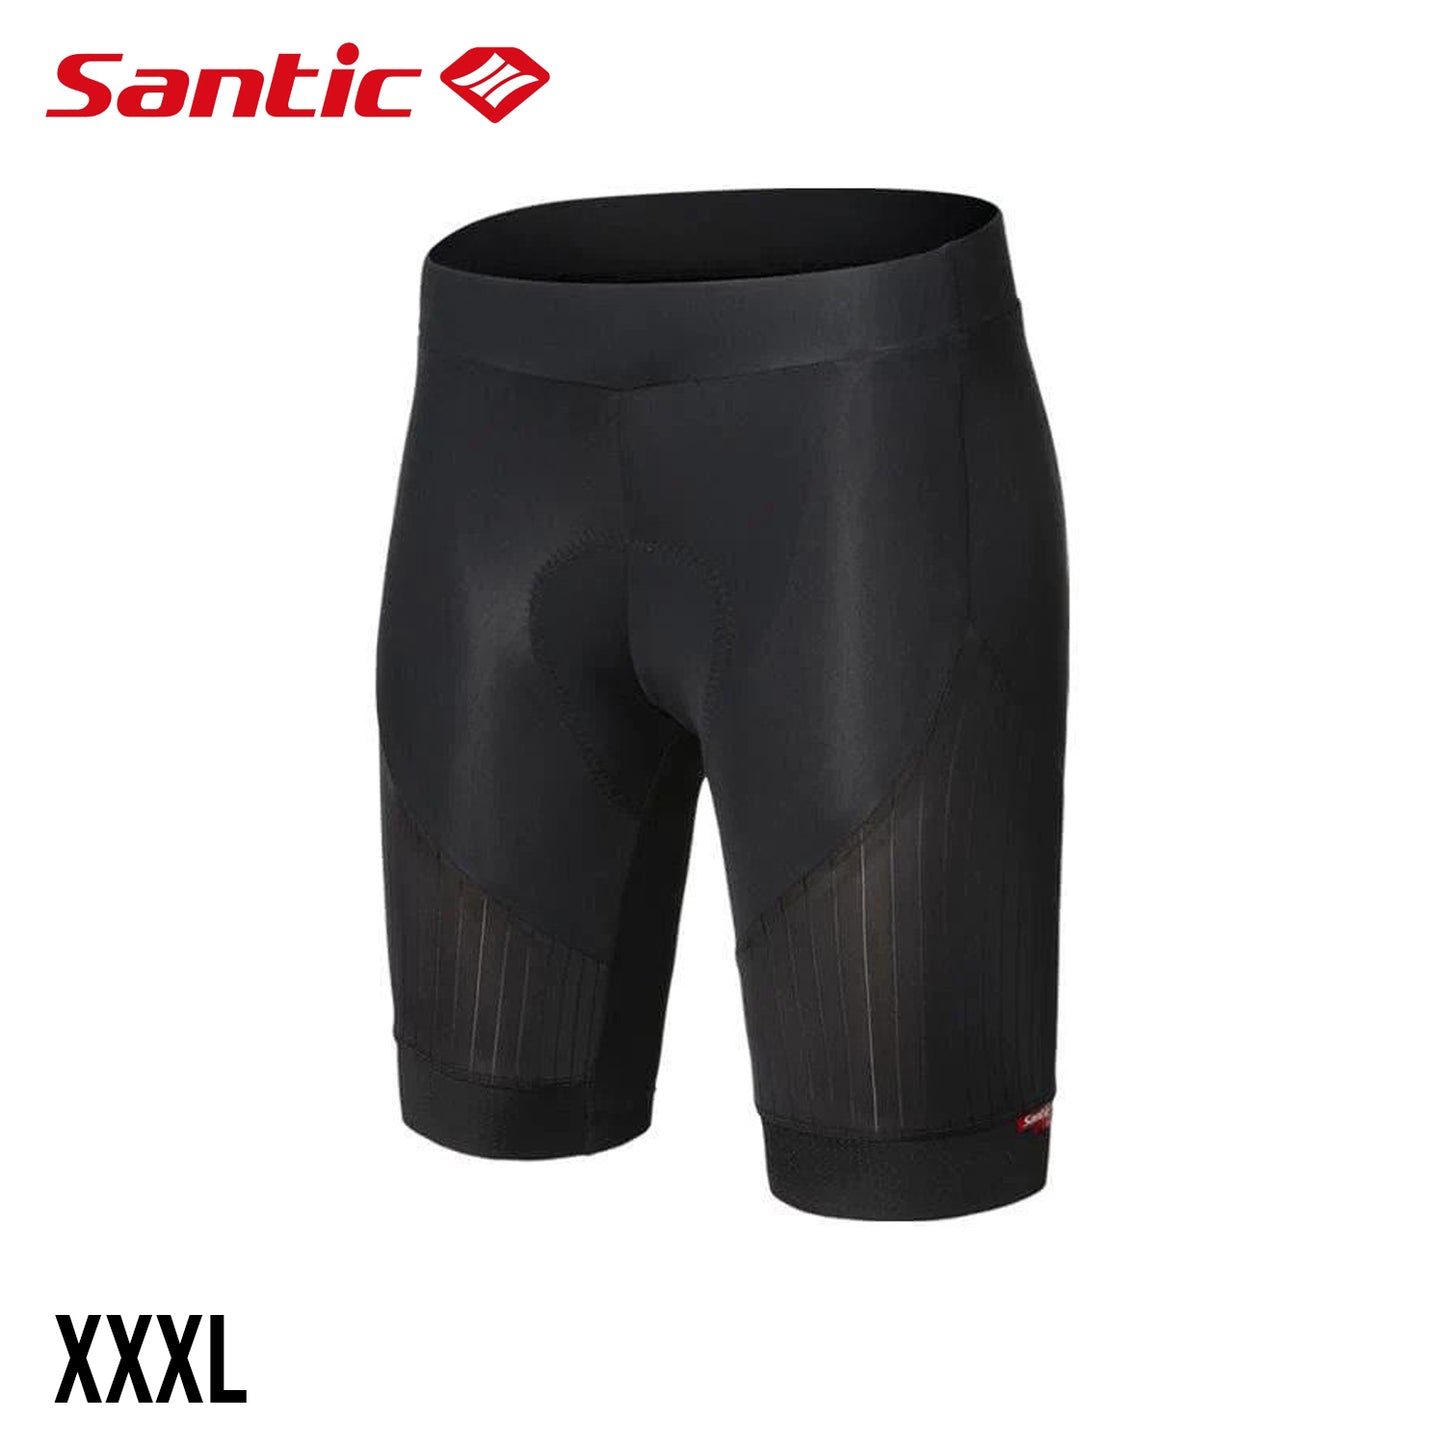 Santic Banda Ⅱ Women's Spring Summer Cycling Shorts - Black